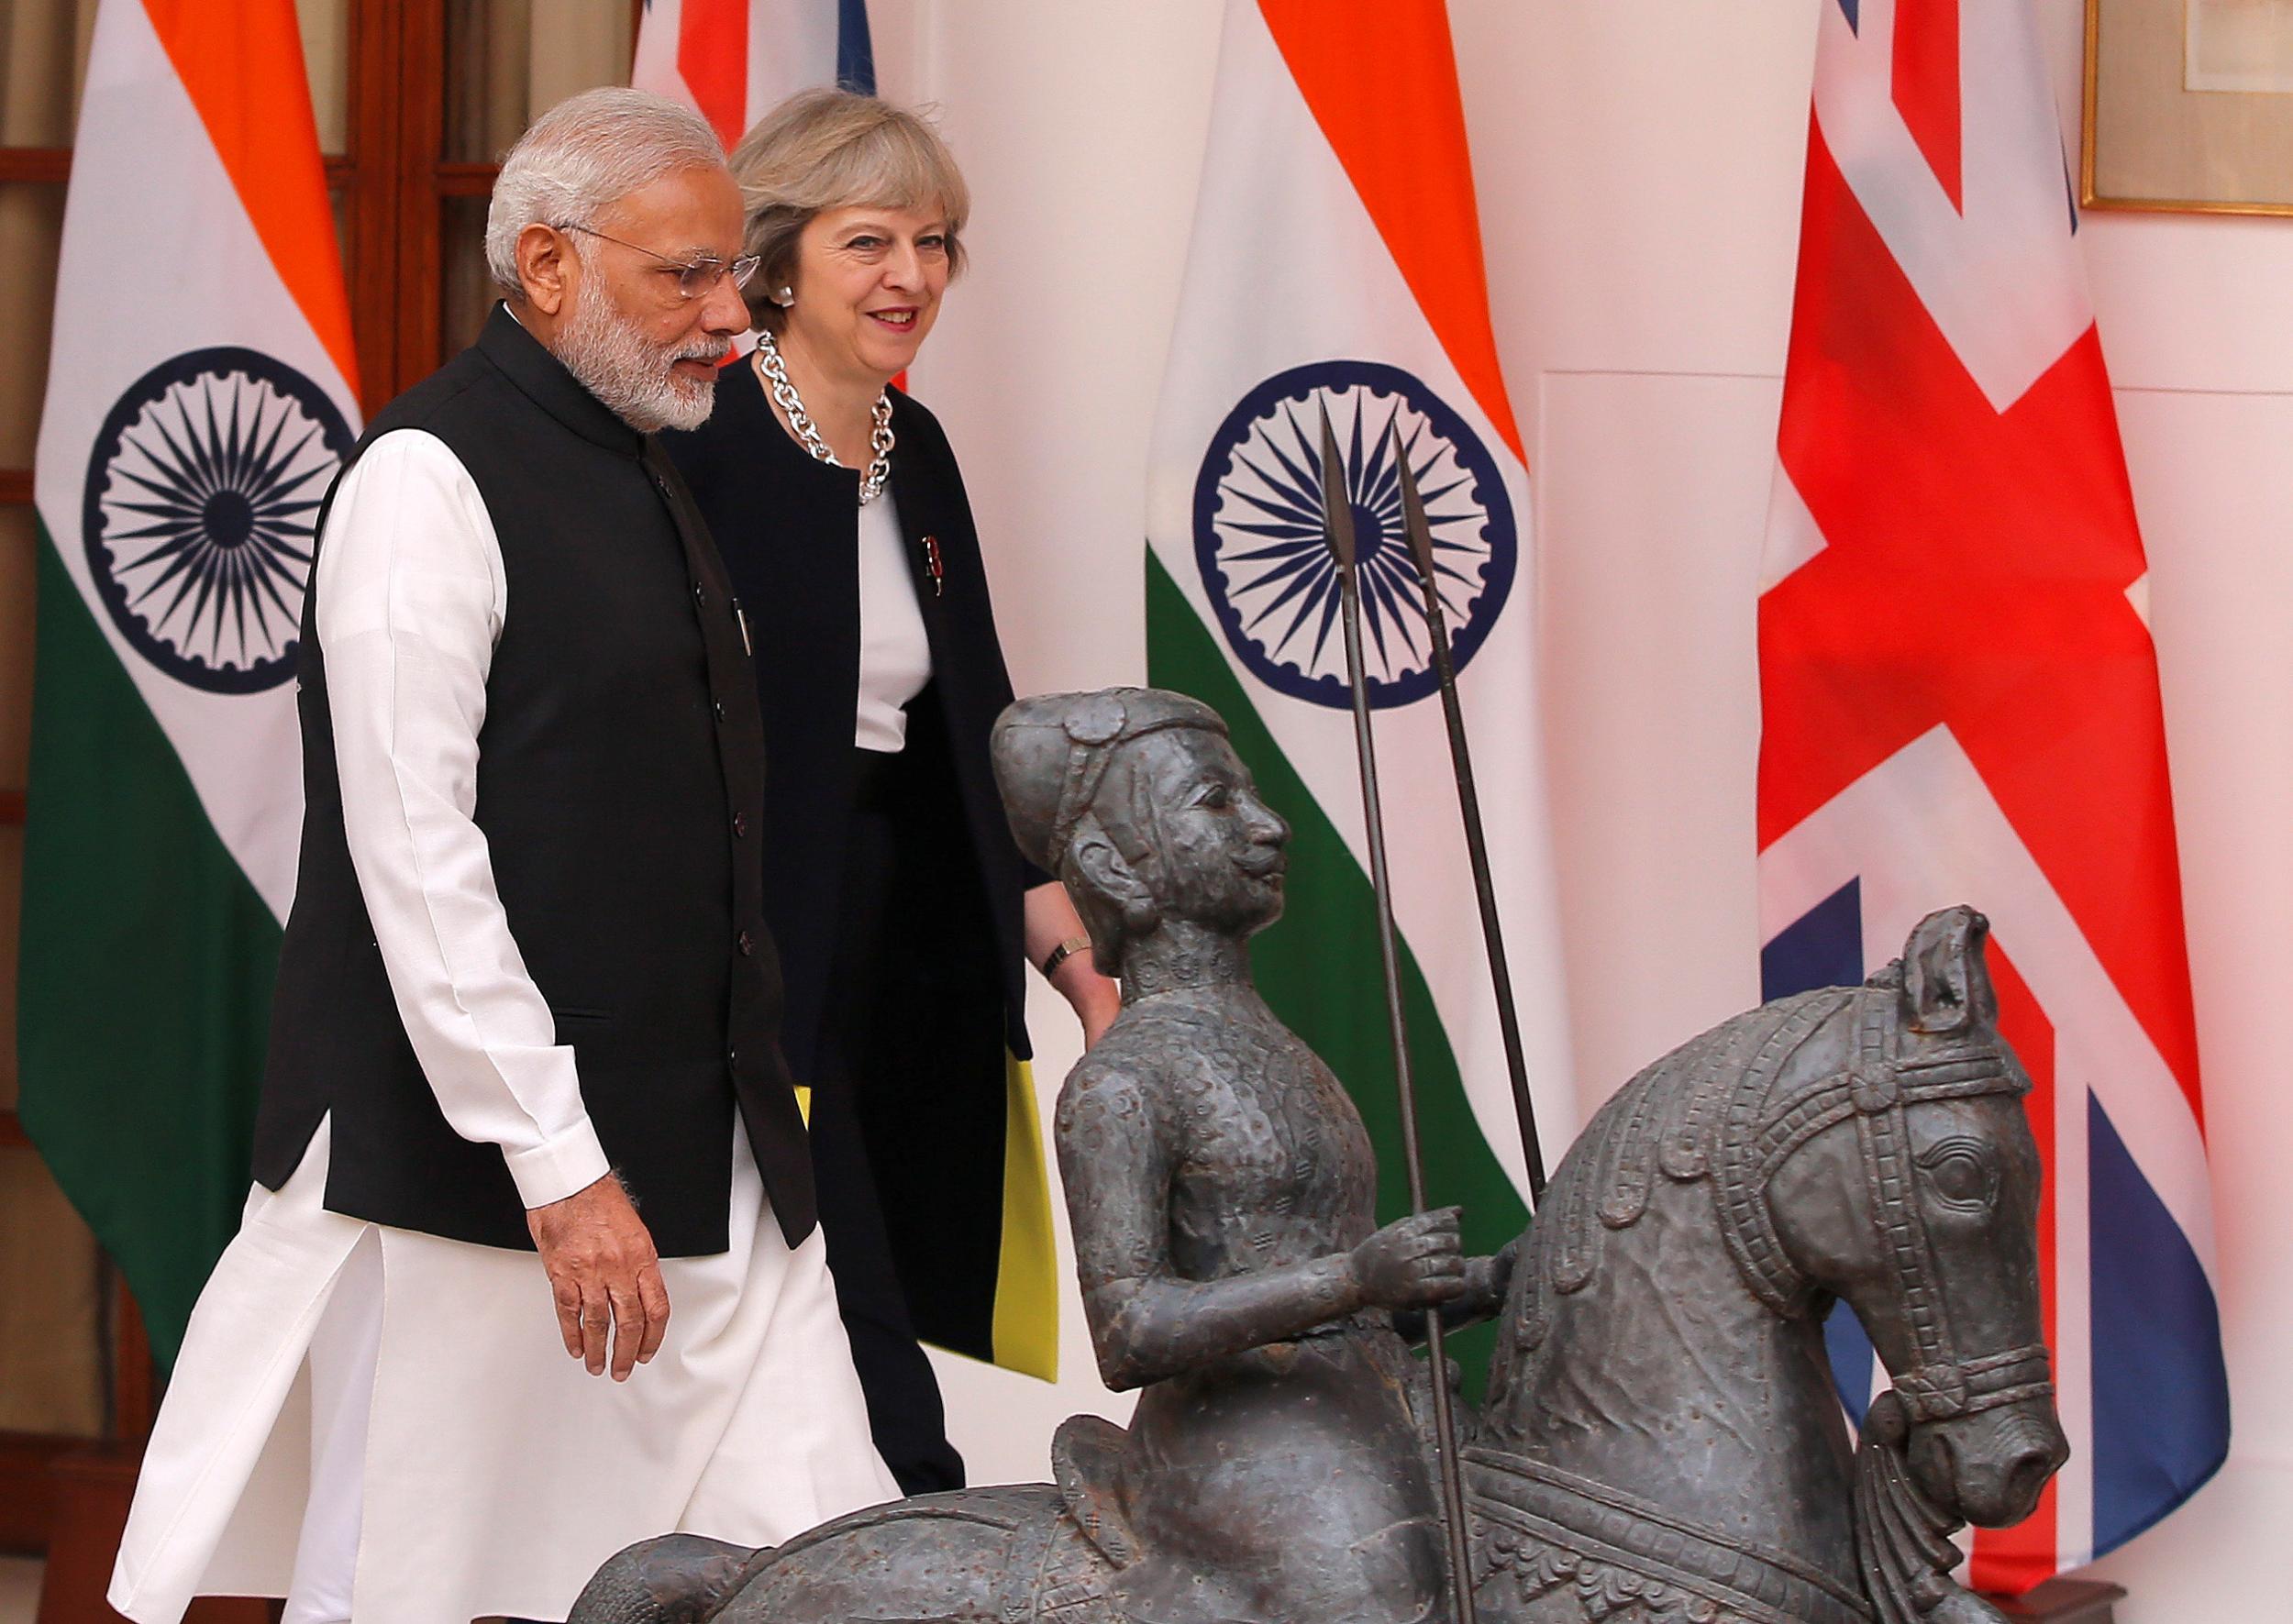 Theresa May and Indian prime minister Narendra Modi at a meeting in November 2016